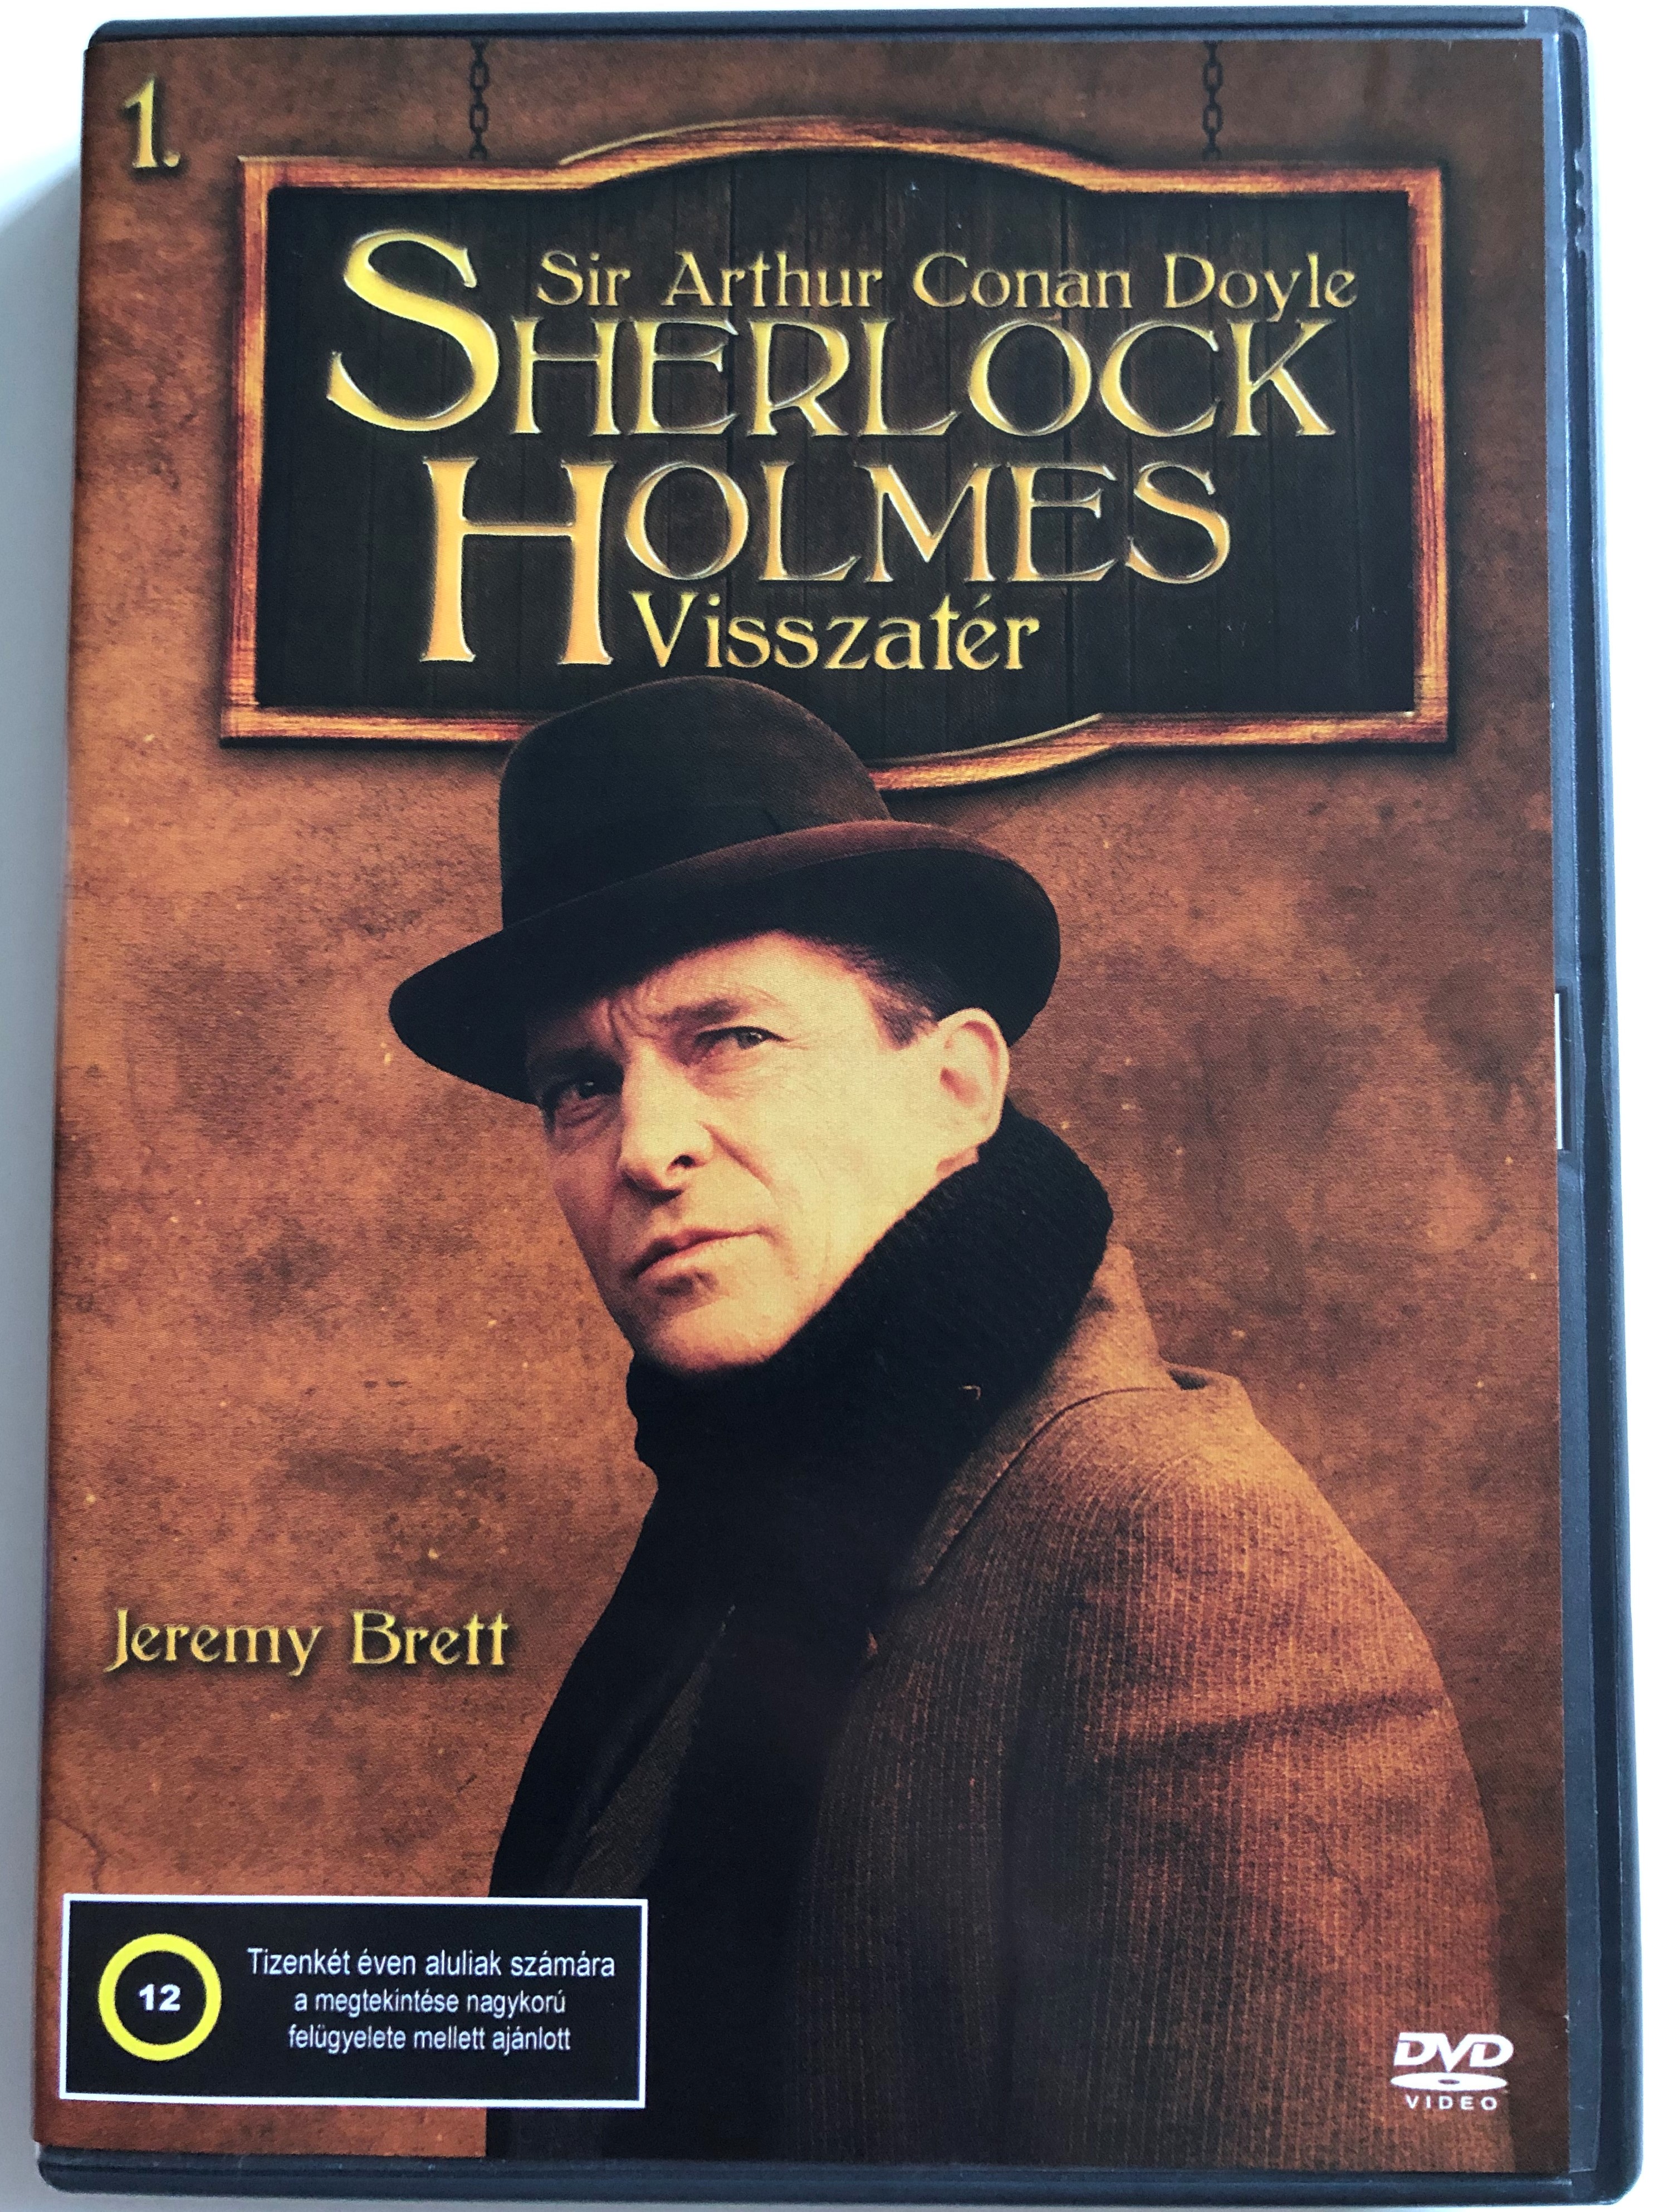 The Return of Sherlock Holmes DVD 1986 Sherlock Holmes Visszatér 1. /  Directed by Peter Hammond, Howard Baker / Written by Sir Arthur Conan Doyle  / Episodes: The Abbey Grange, The Empty